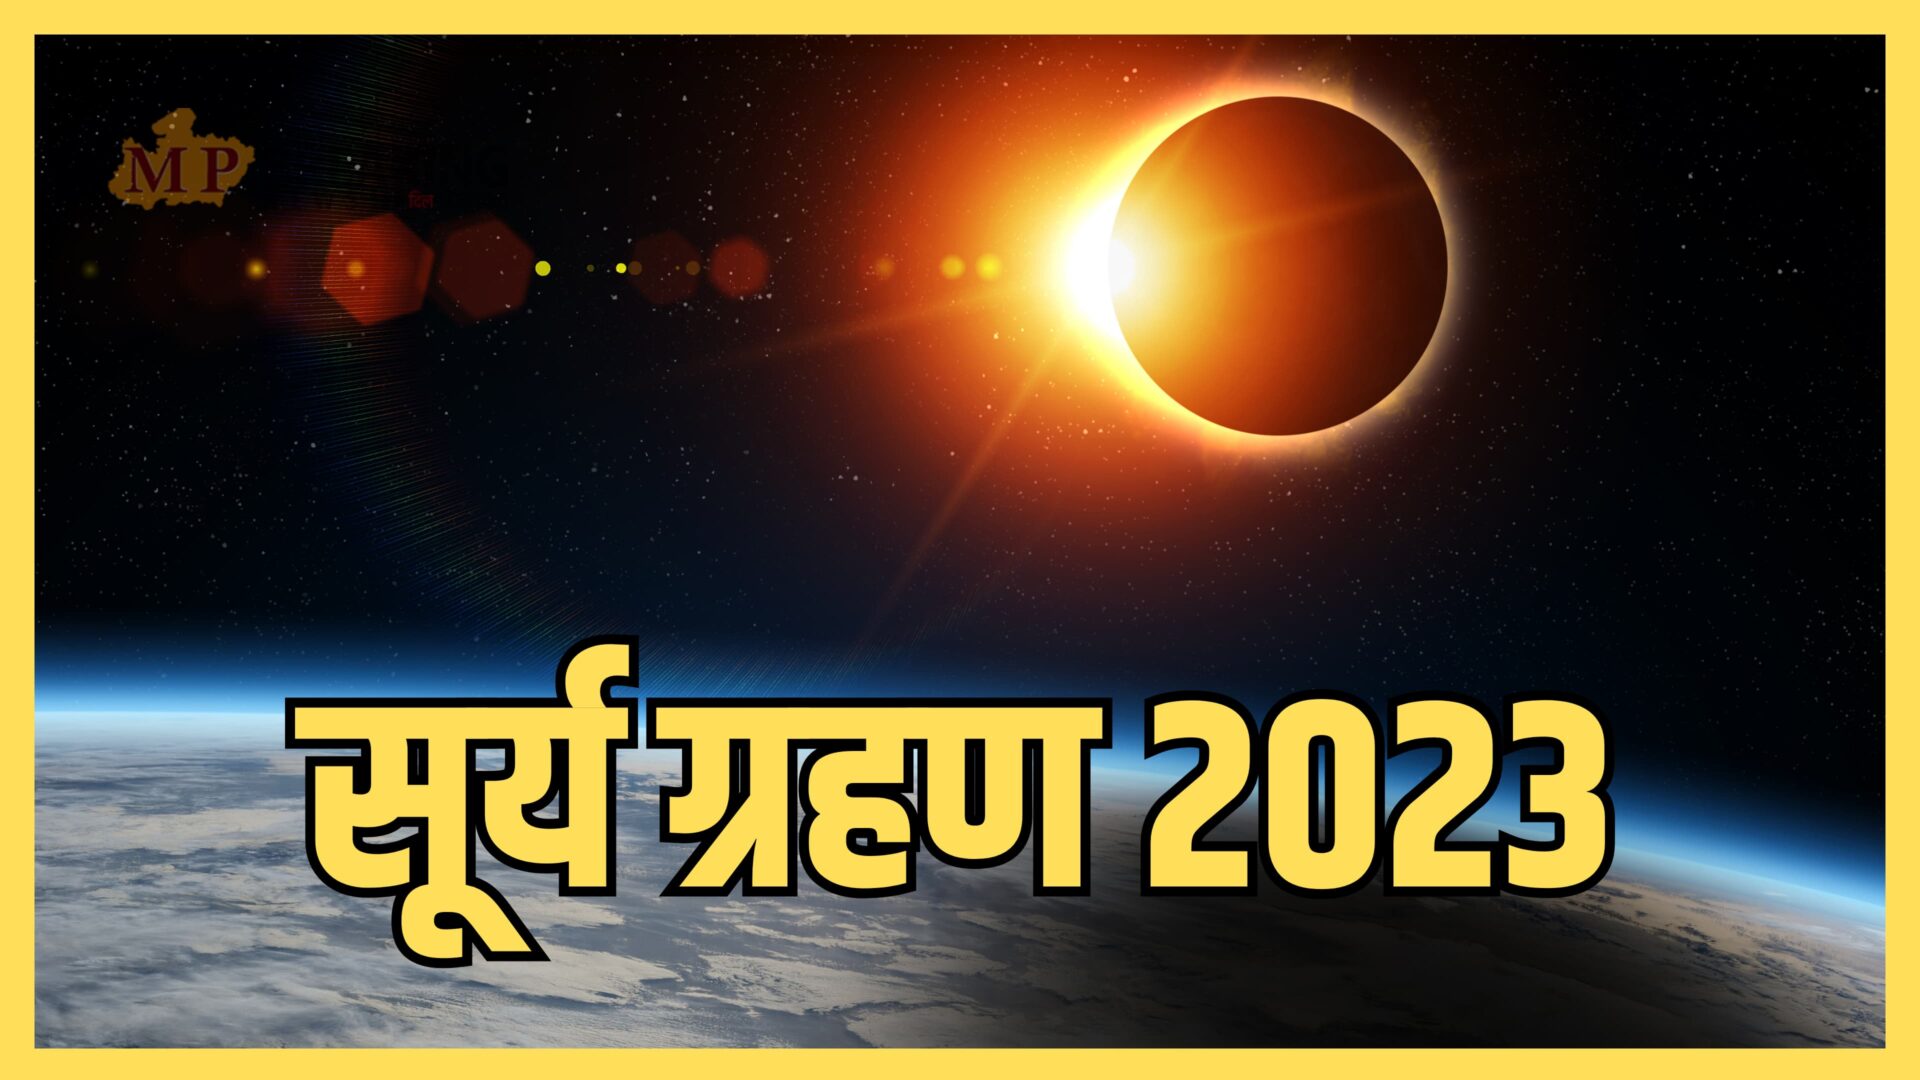 SURYA GRAHAN 2023